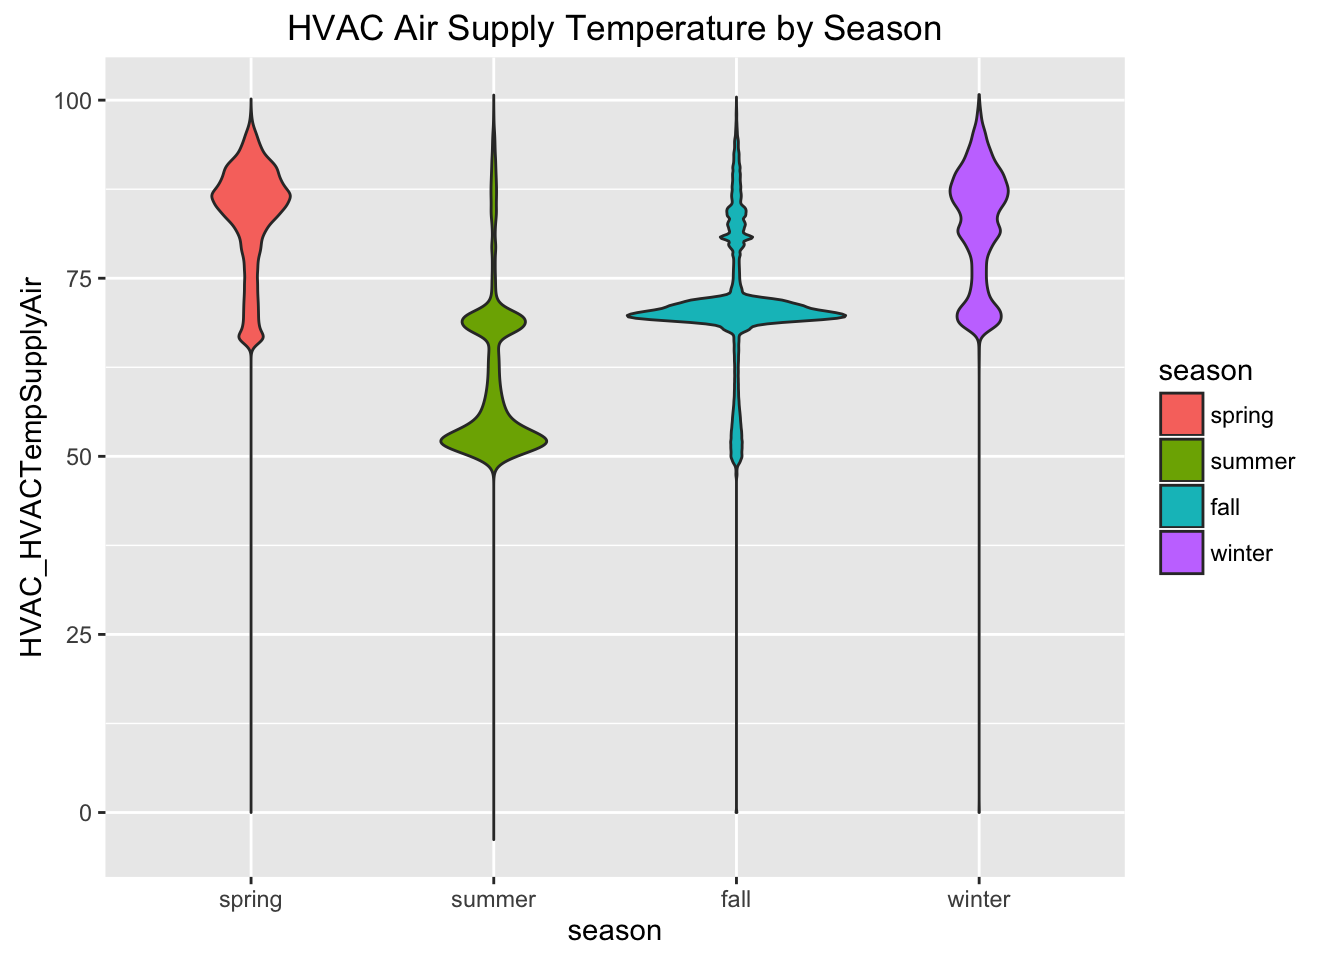 HVAC temporature by season visualization